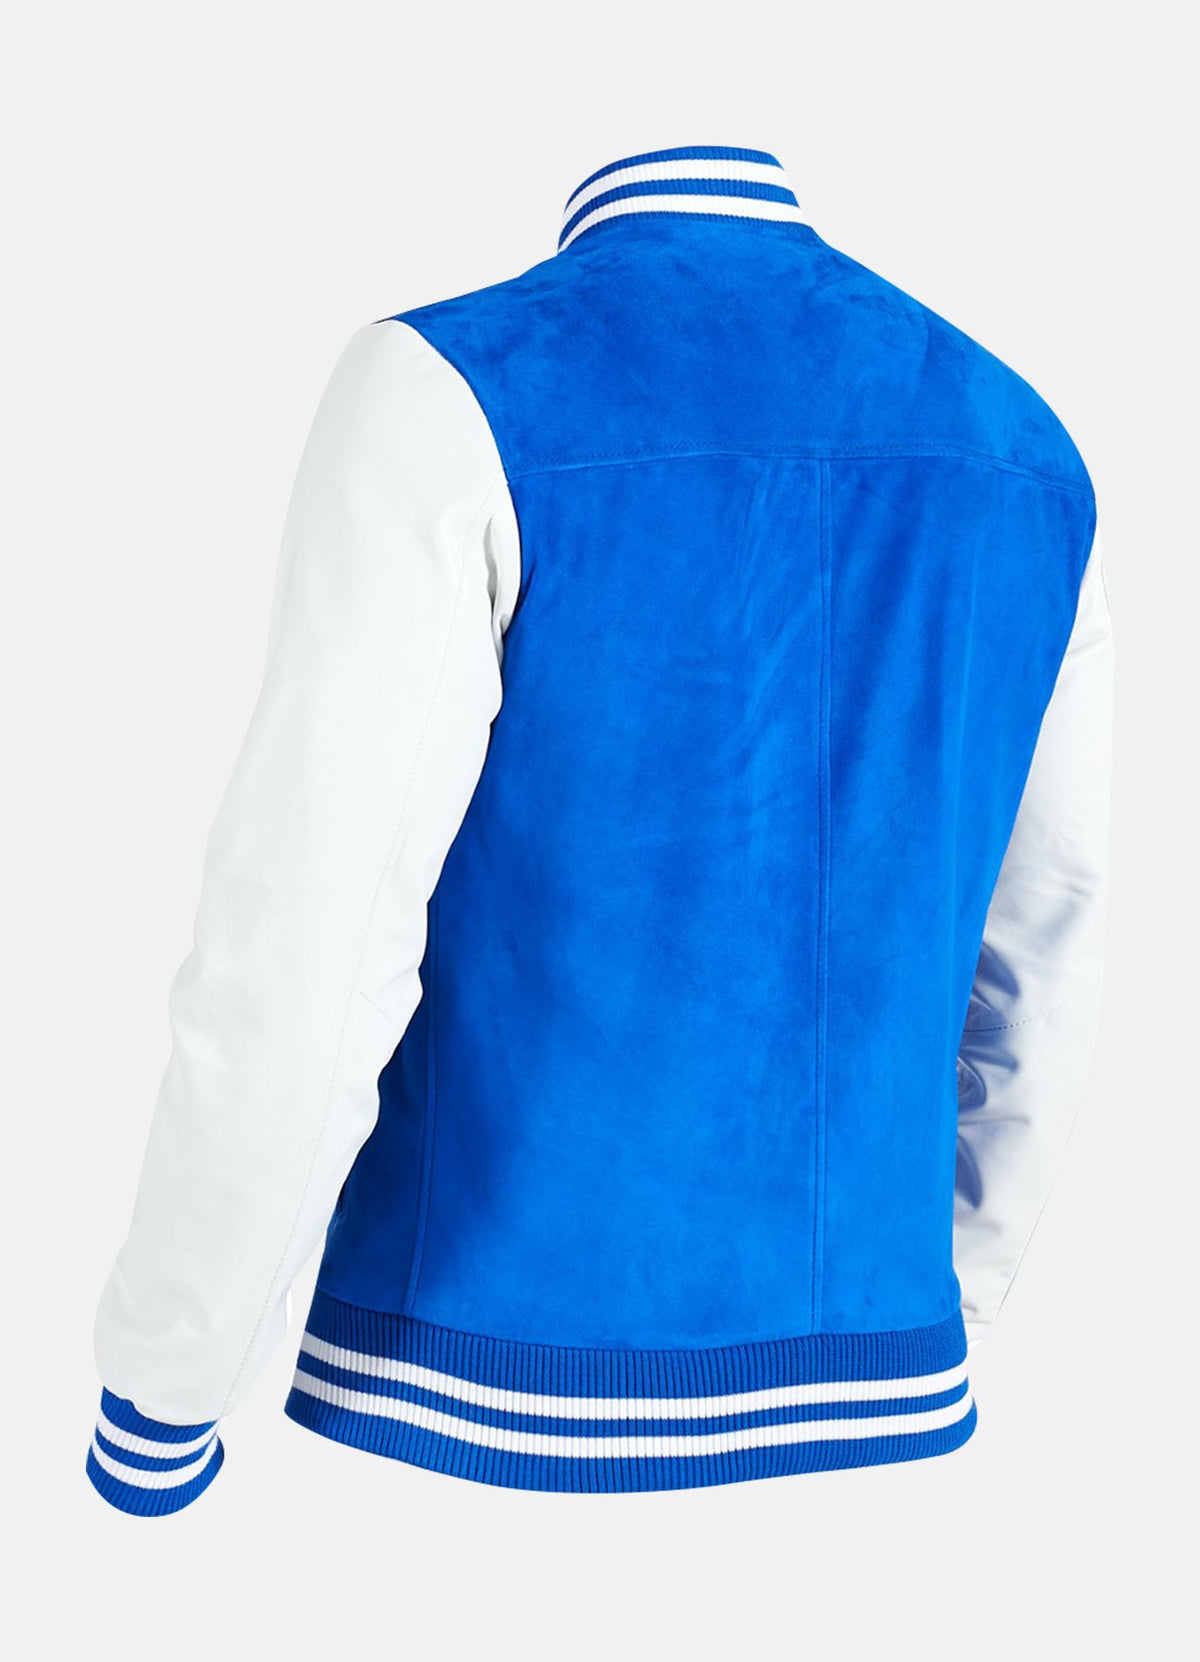 Mens Blue and White Varsity Jacket